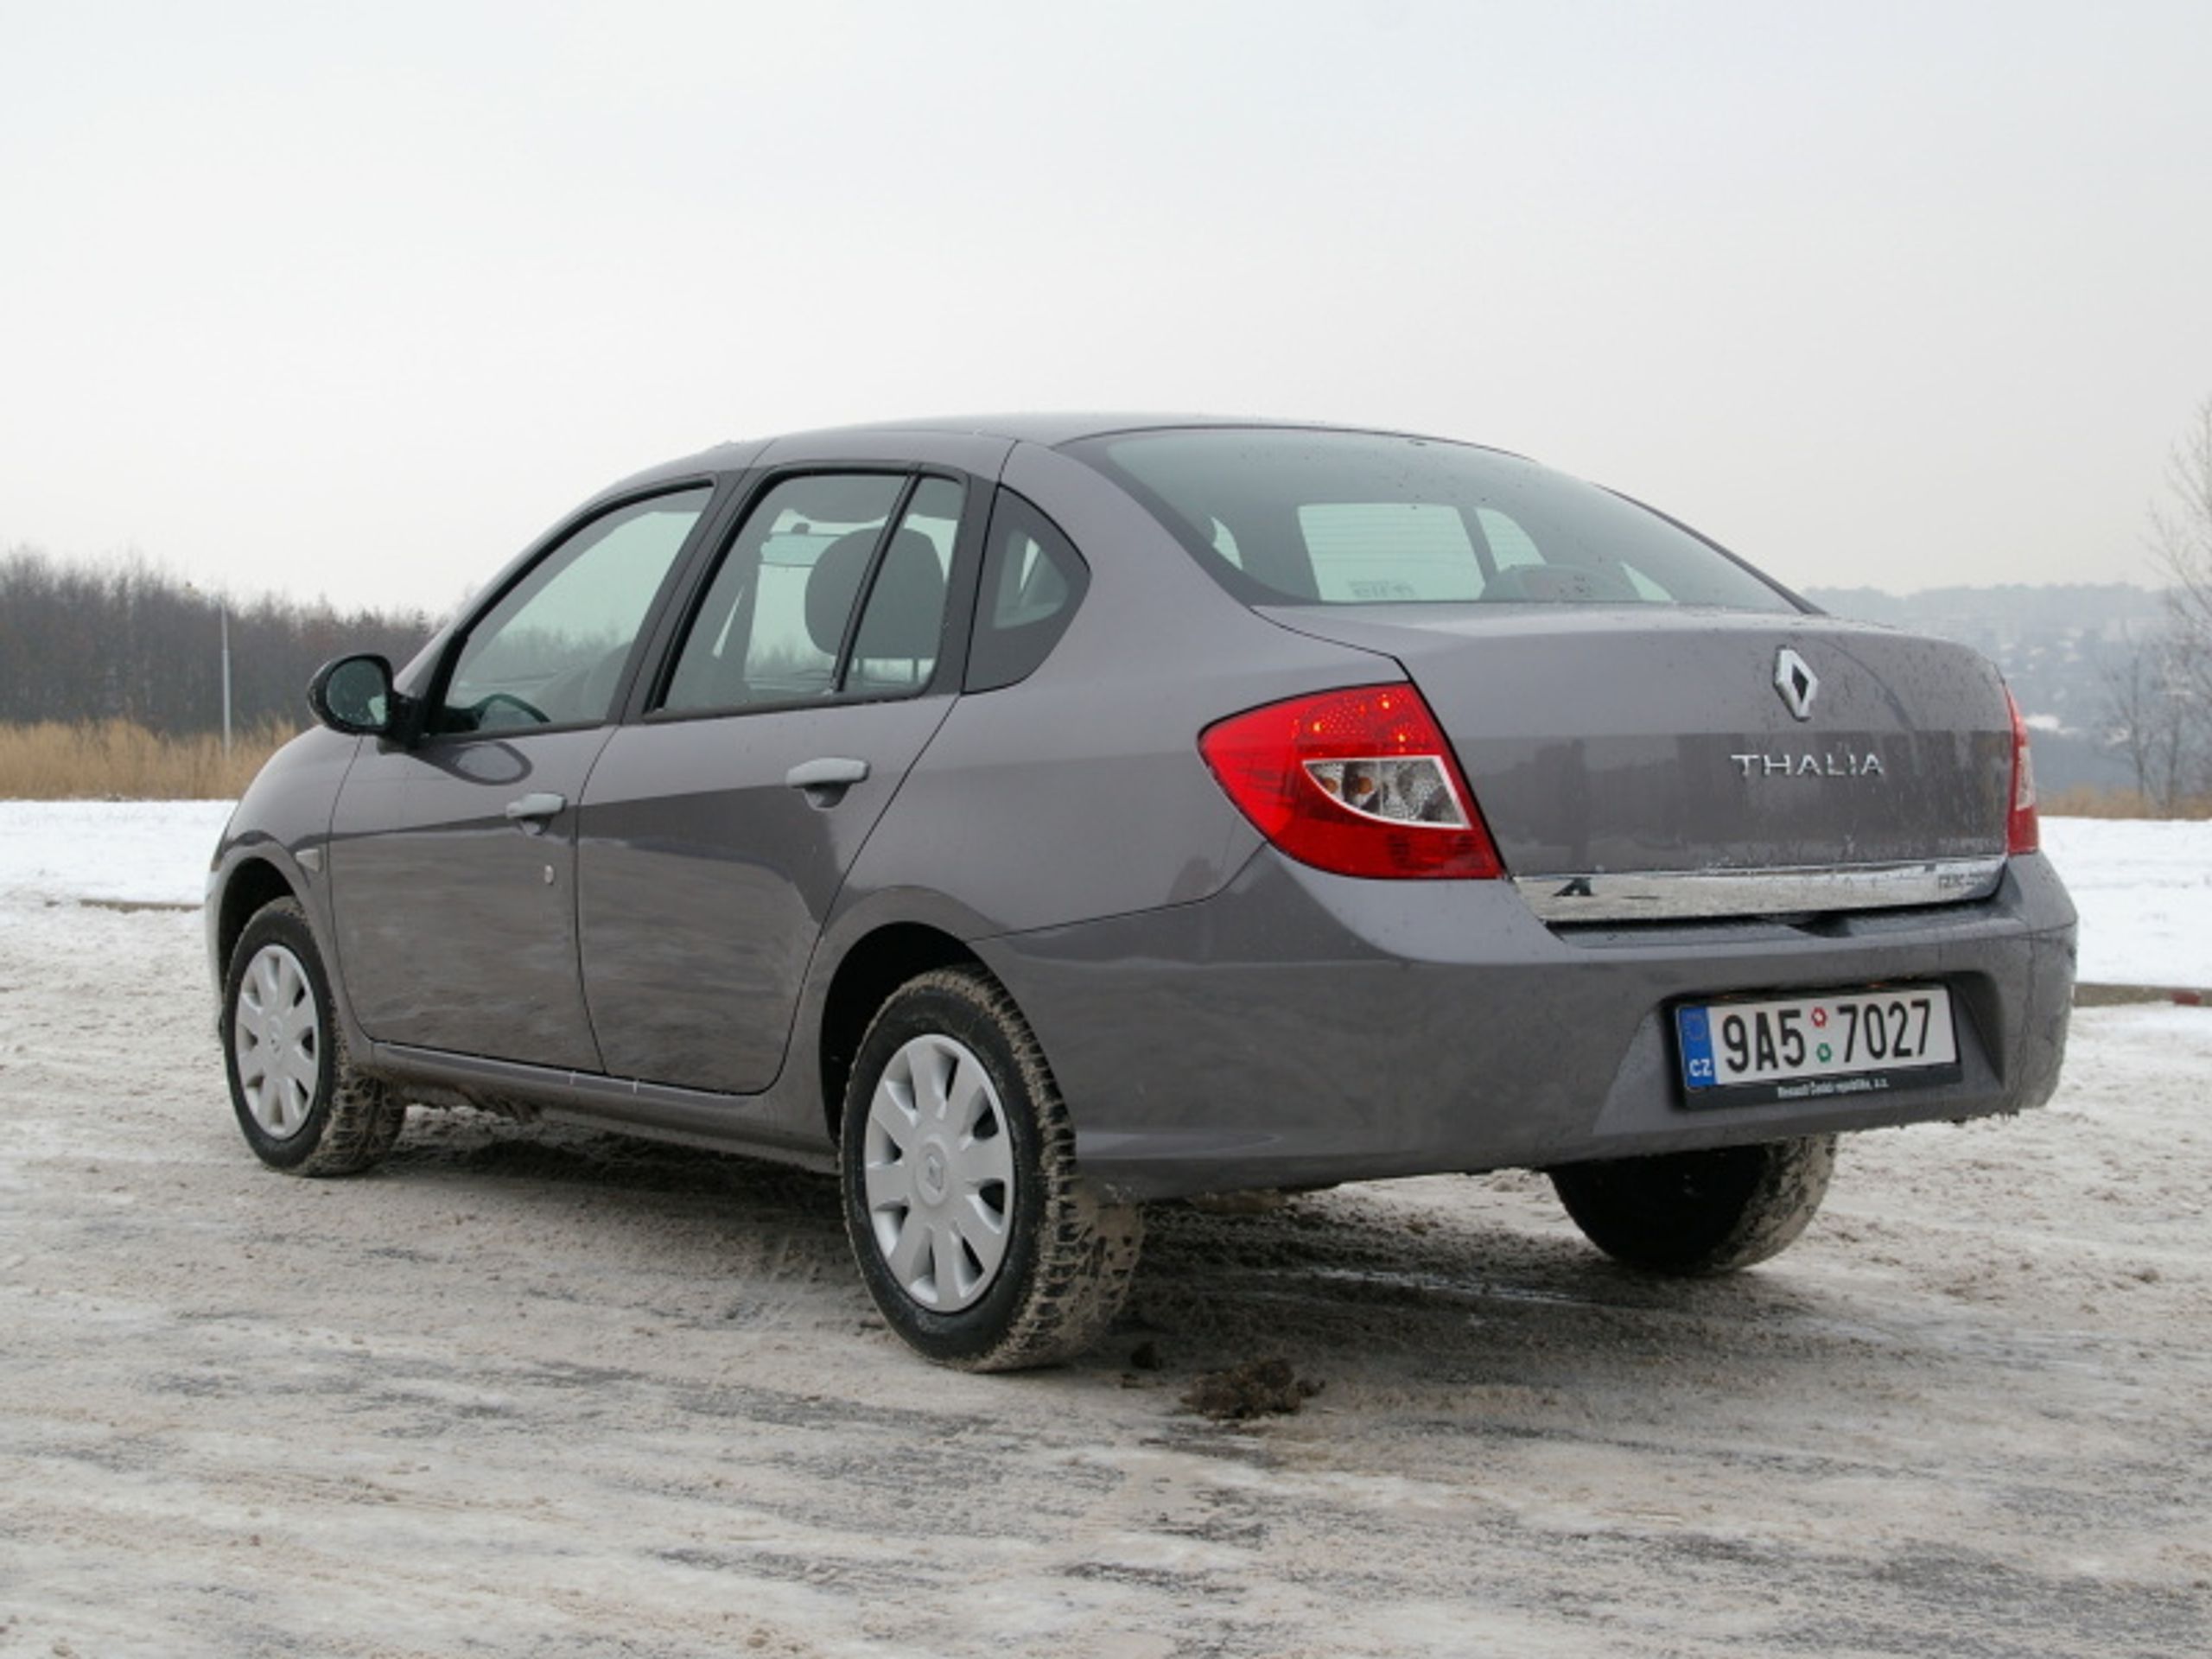 Renault Thalia - GALERIE Renault Thalia (1/7)